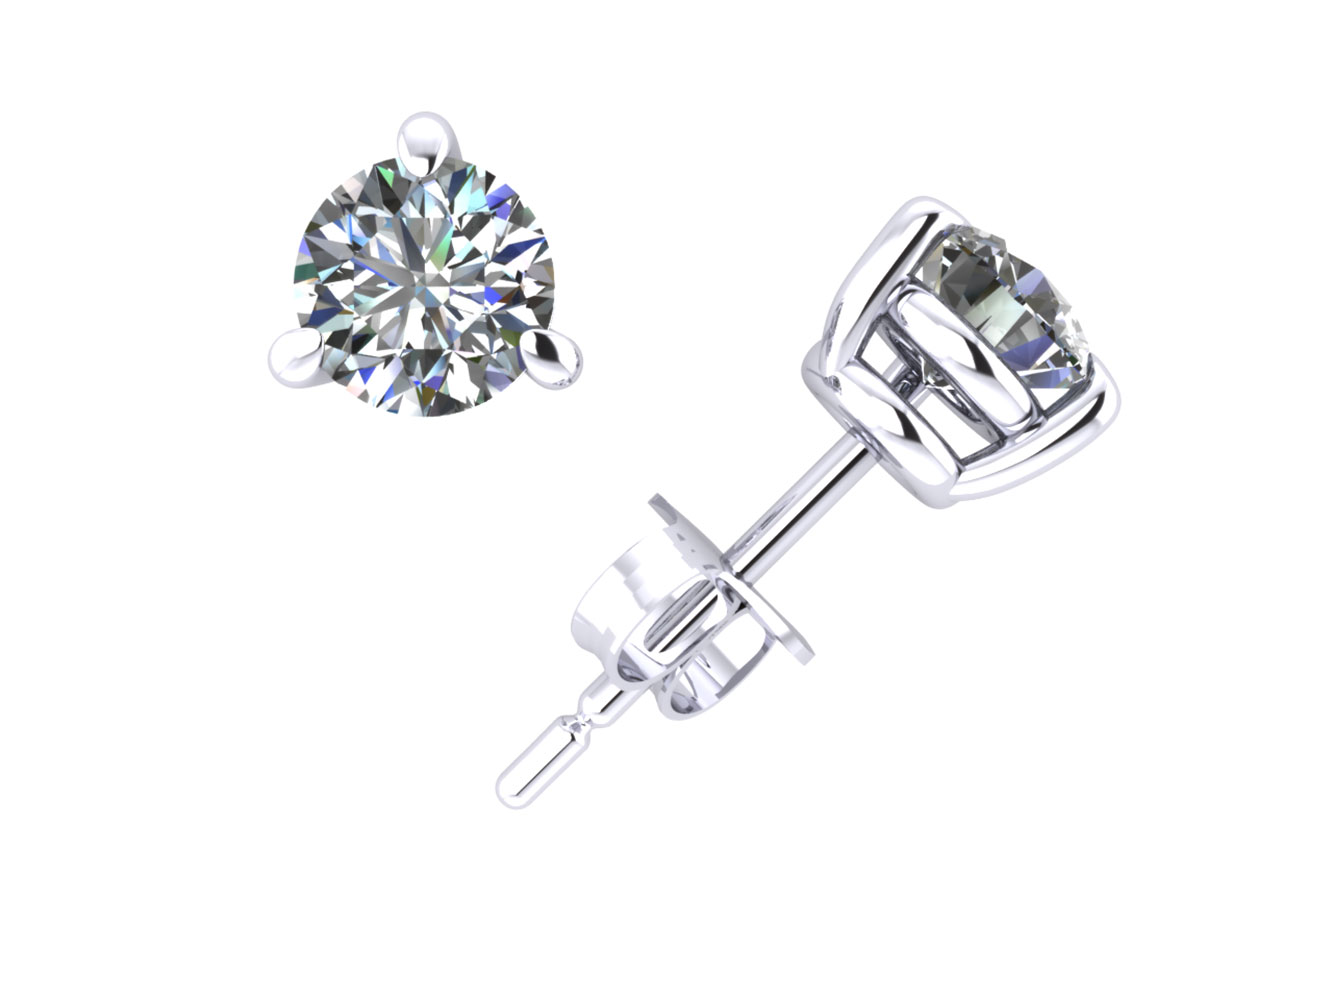 Jewel We Sell 0.40Ct Round Cut Diamond Basket Stud Earrings 10k White or Yellow Gold 3Prong Set Push Back K I2